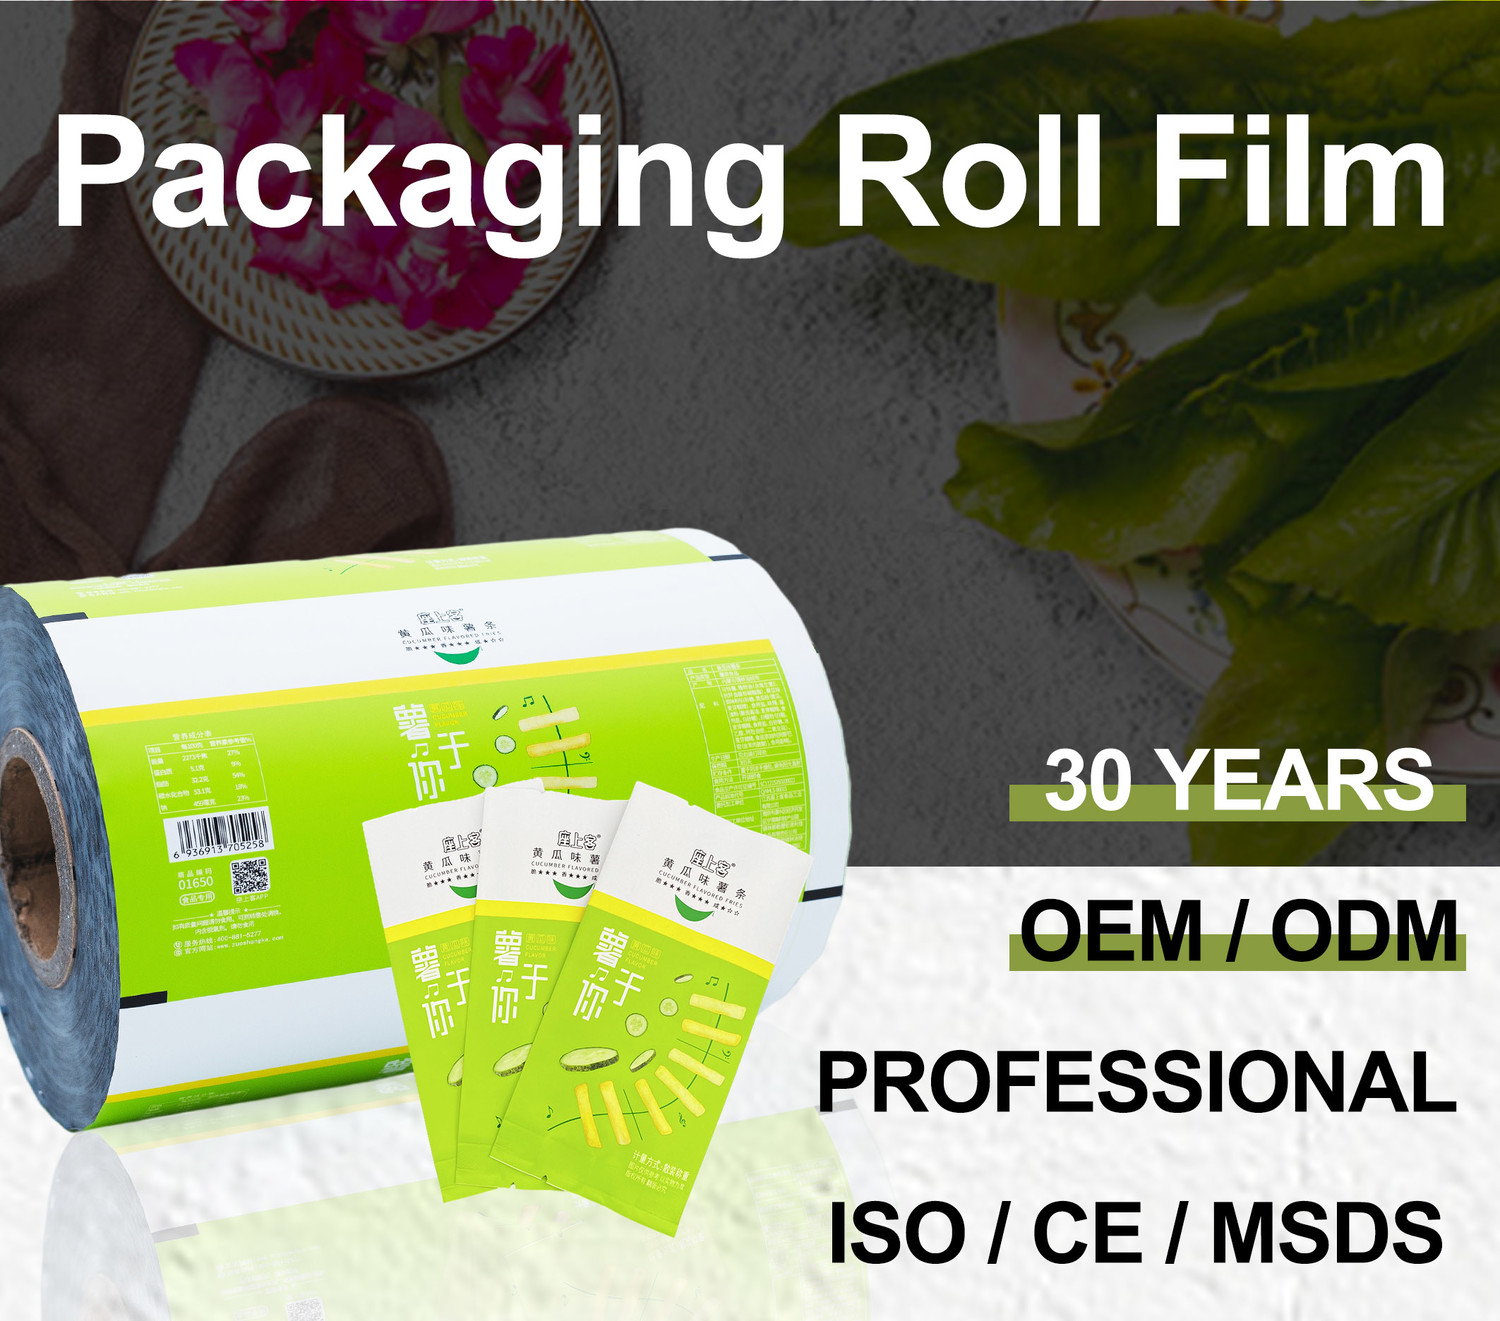 Packaging Roll Film film for popcorn packaging